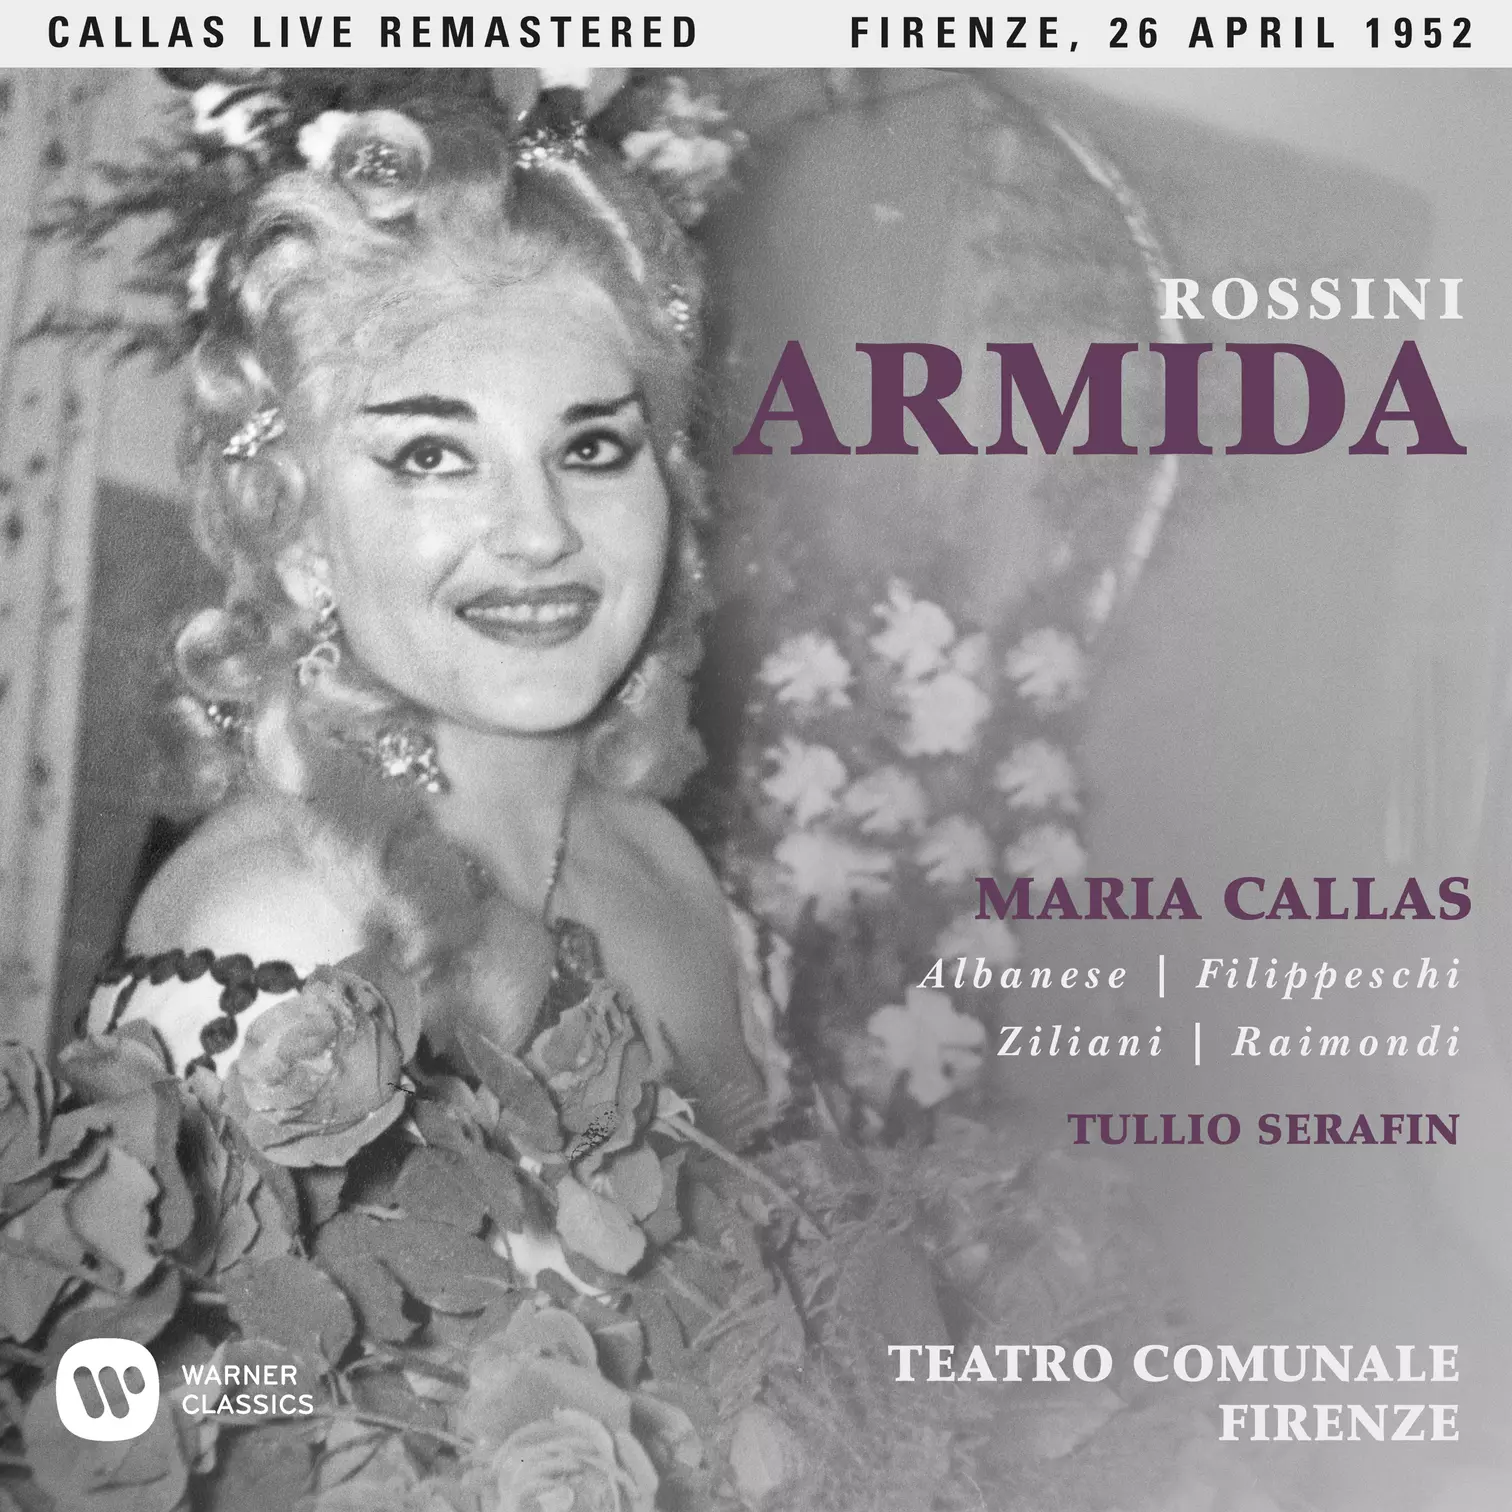 Rossini: Armida (1952 - Florence) - Callas Live Remastered